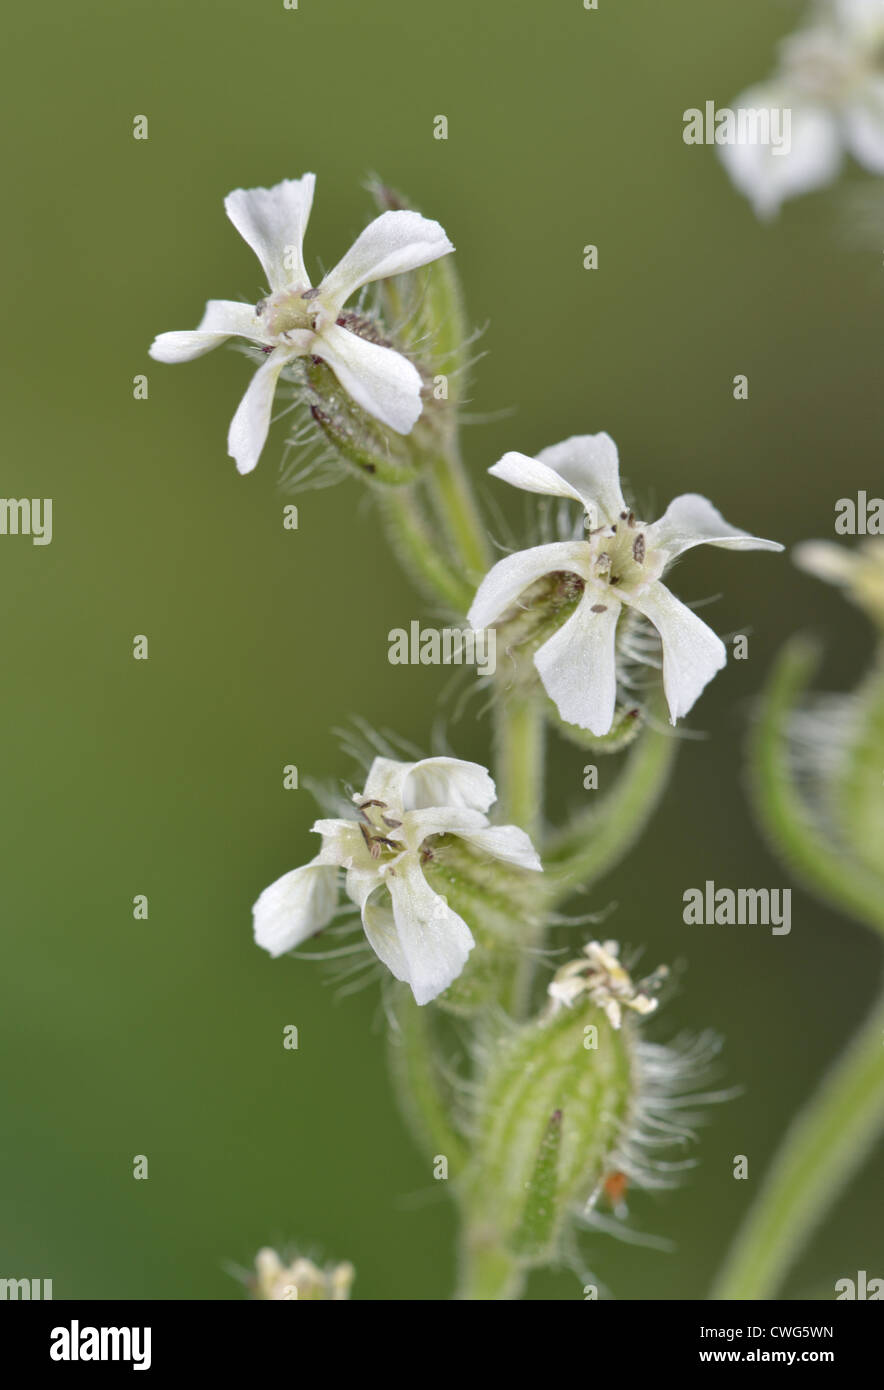 SMALL-FLOWERED CATCHFLY Silene gallica (Caryophyllaceae) Stock Photo